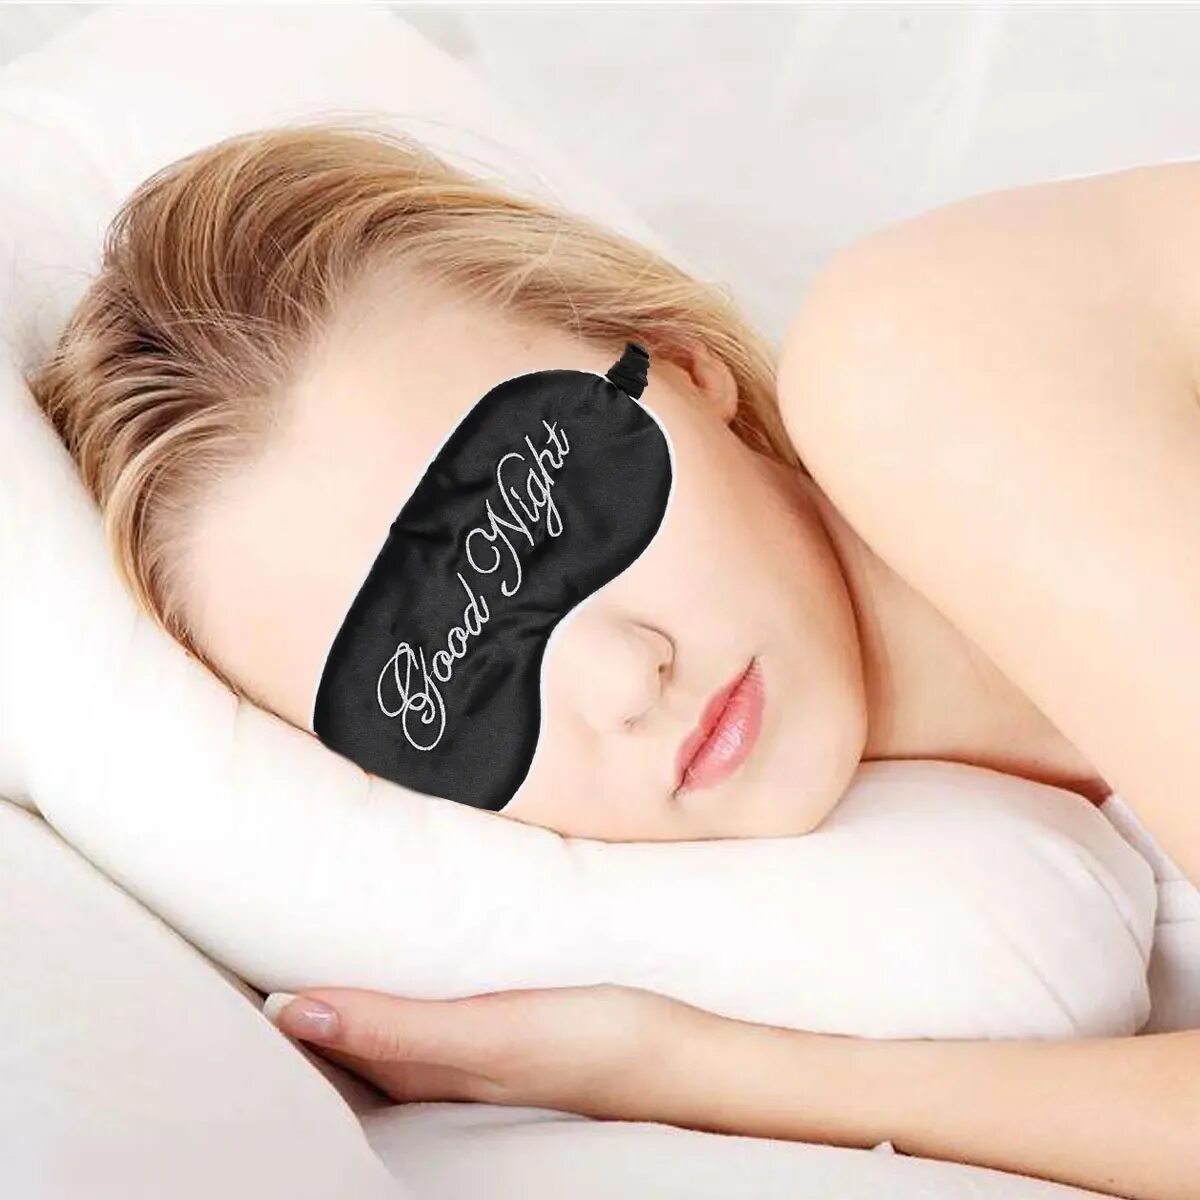 Маска для сна. Повязка для сна. Маска для сна "глаз". Повязка на глаза для сна. Как использовать ночную маску